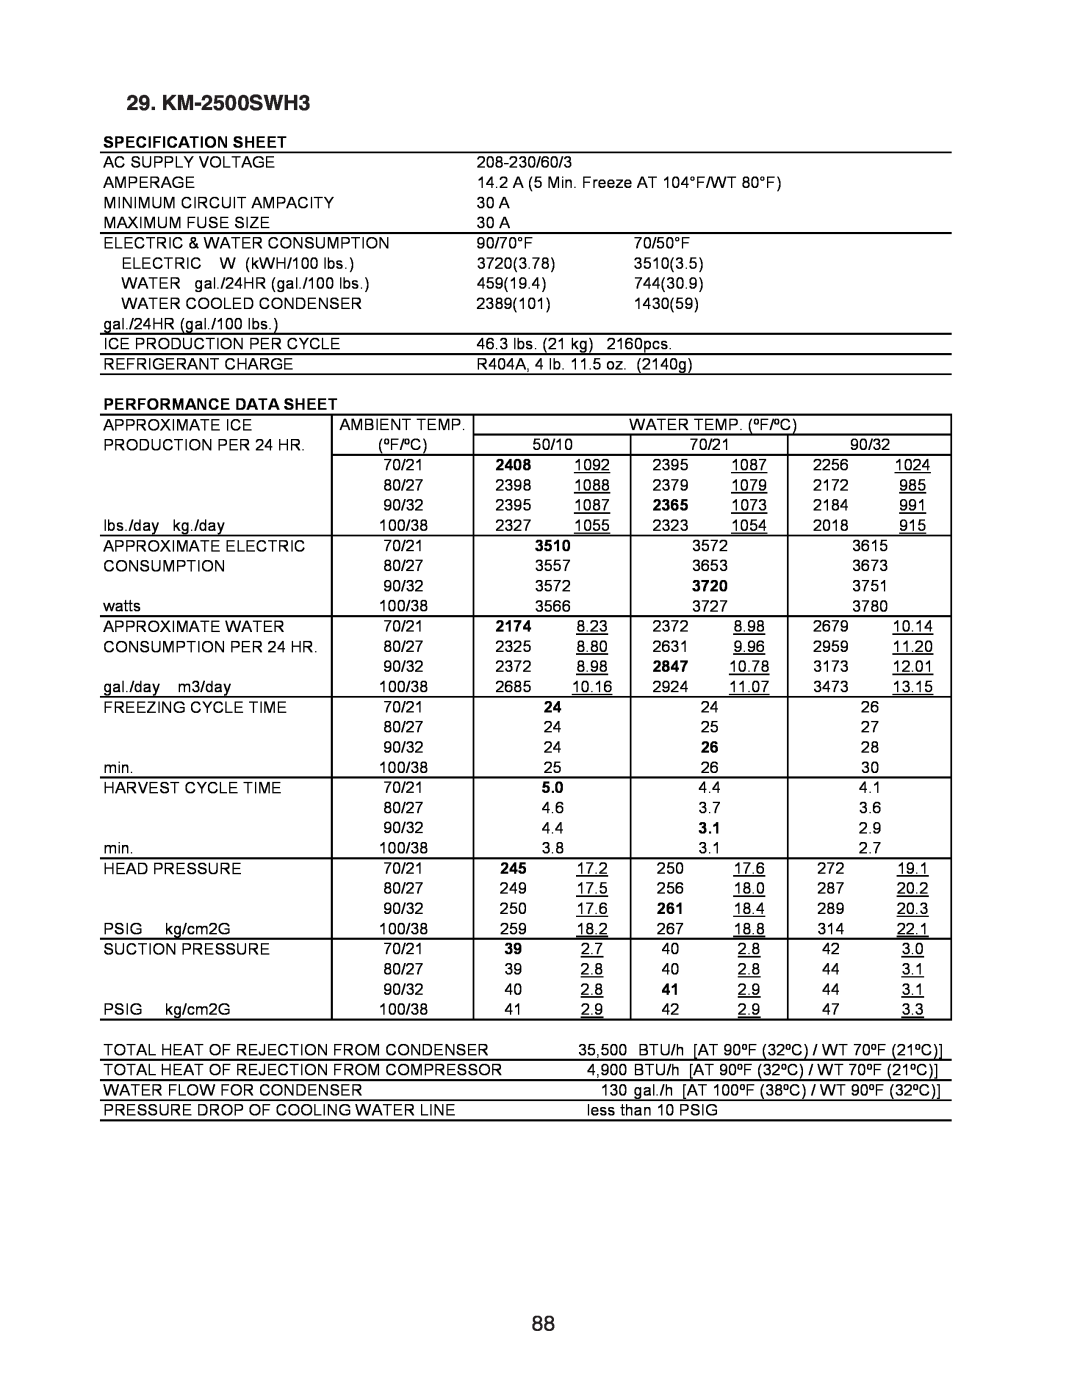 Hoshizaki SRH3 KM-2500SWH3, SRH/3 KM-2100SWH3, KM-1301SAH/3 Specification Sheet, Performance Data Sheet, 2408, 2174 